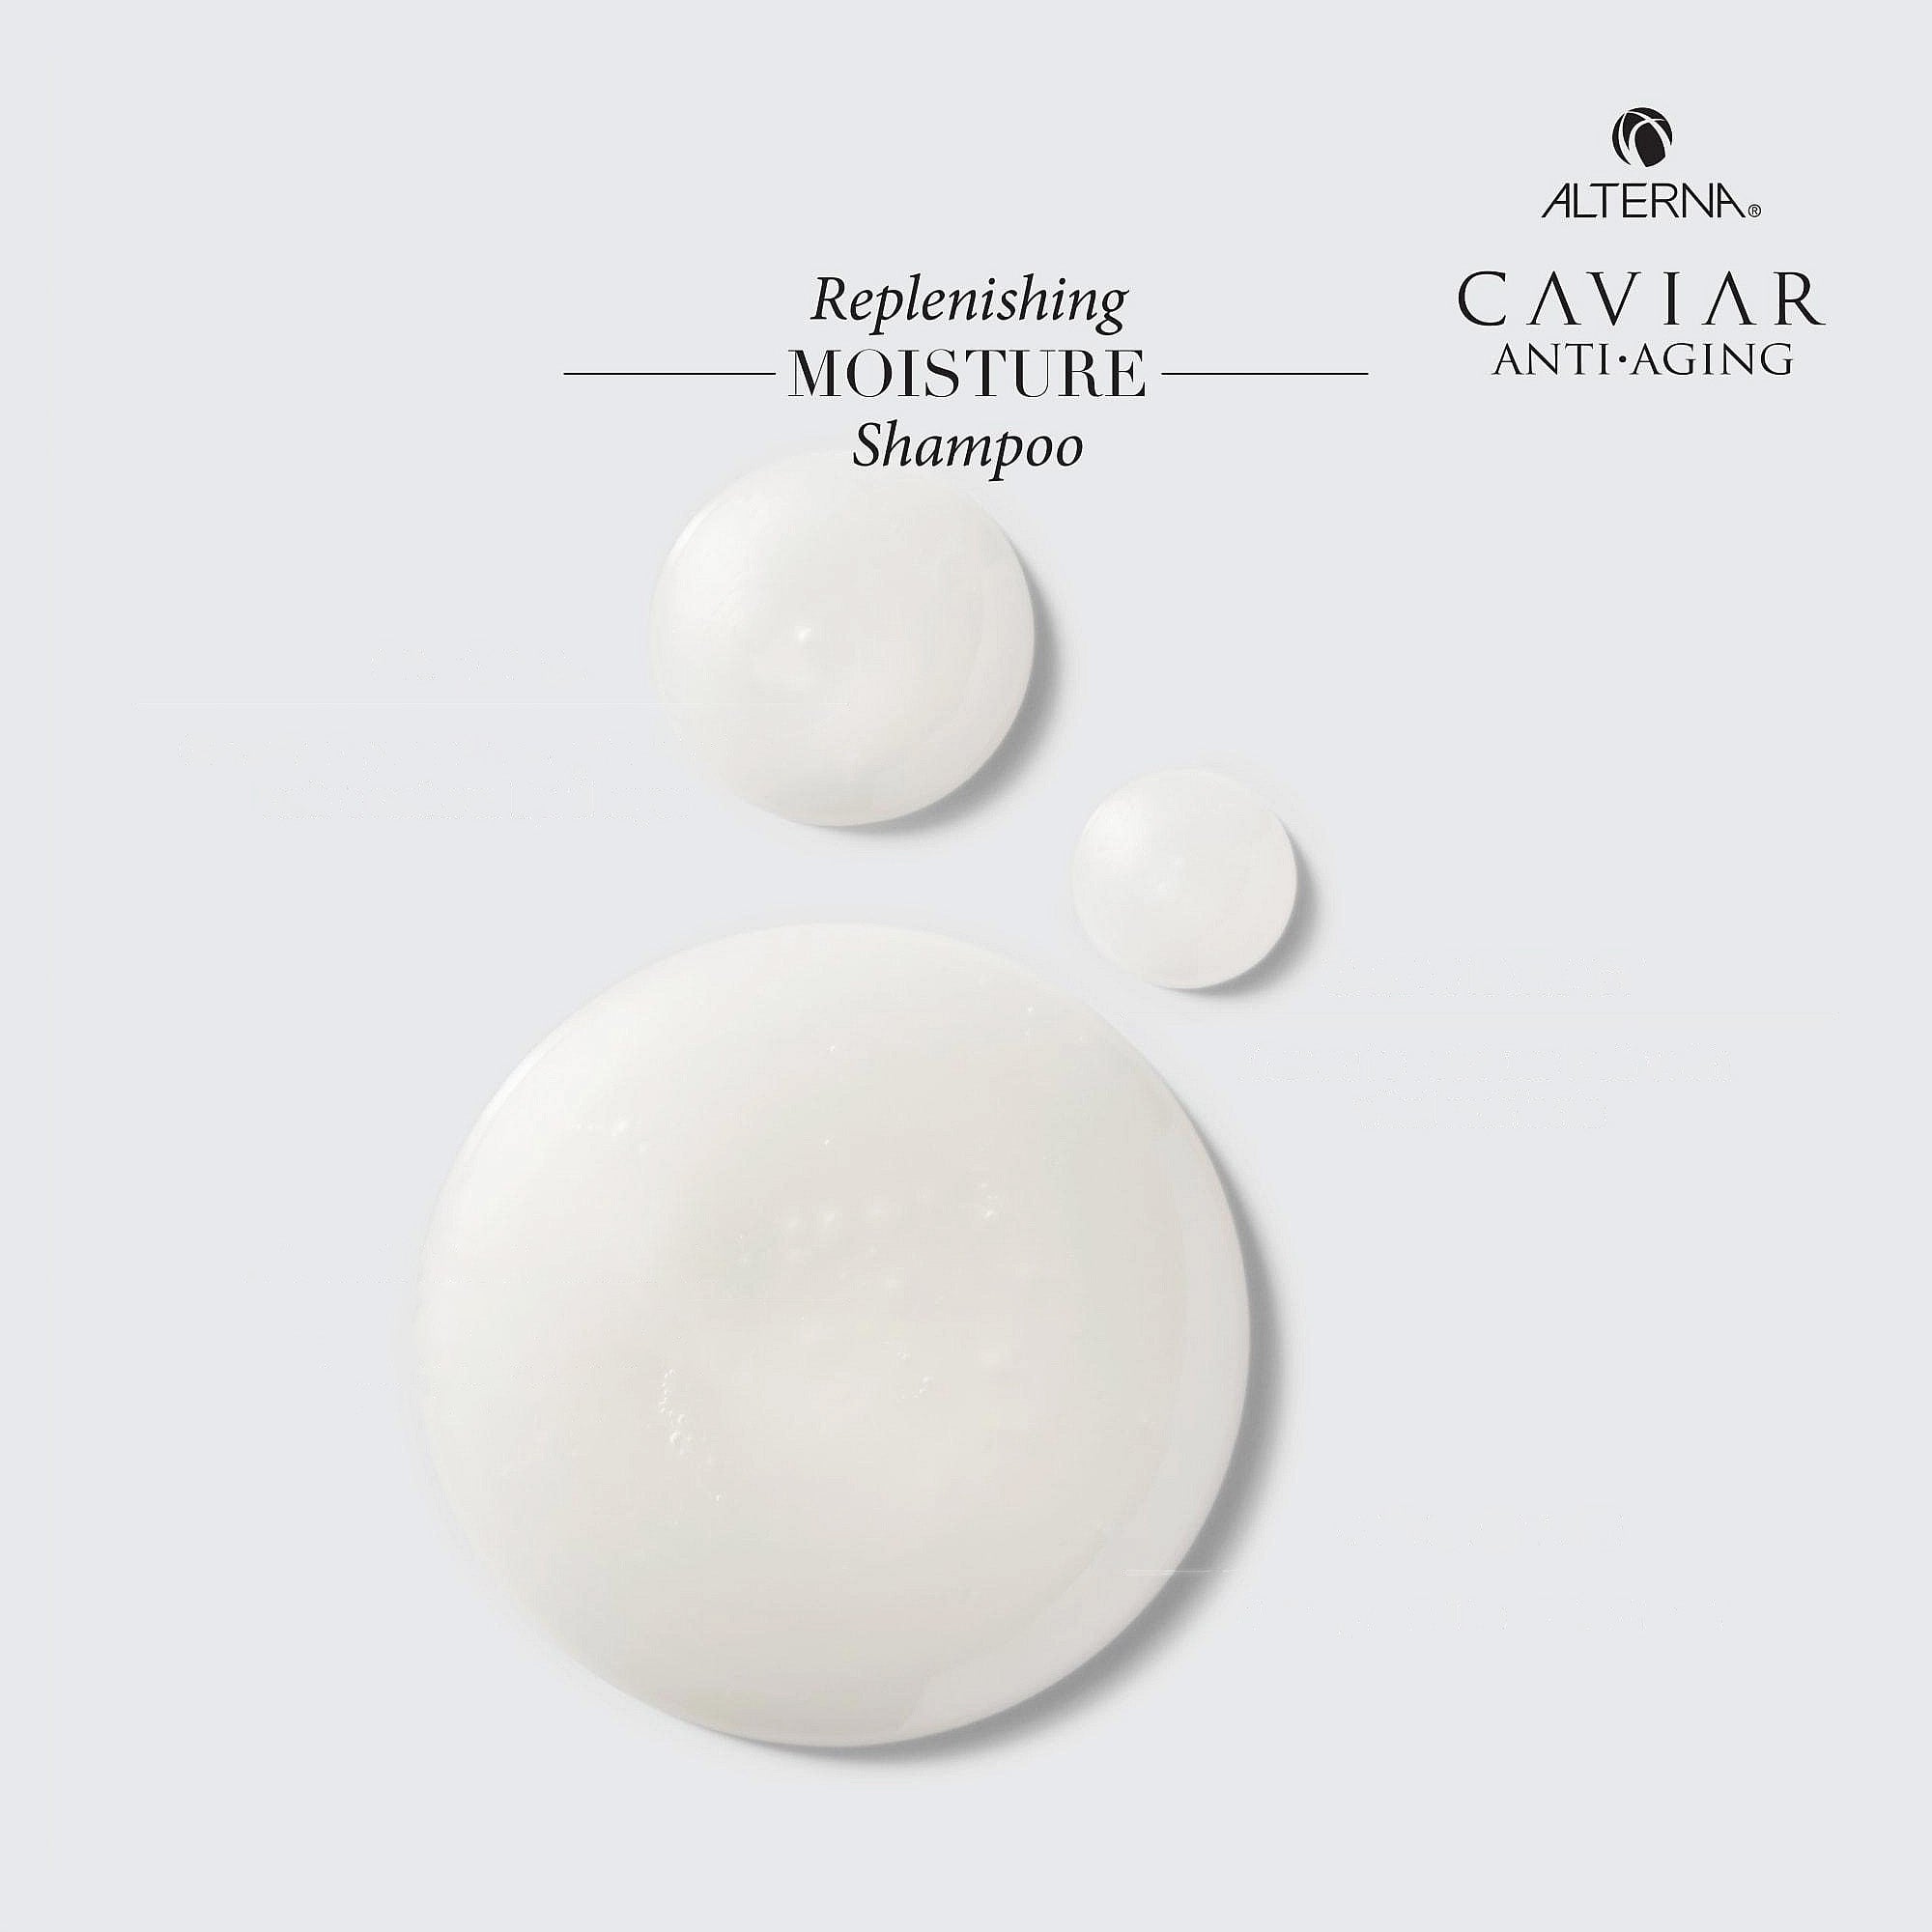  Alterna Caviar Anti-Aging Replenishing Moisture Shampoo / 33OZ